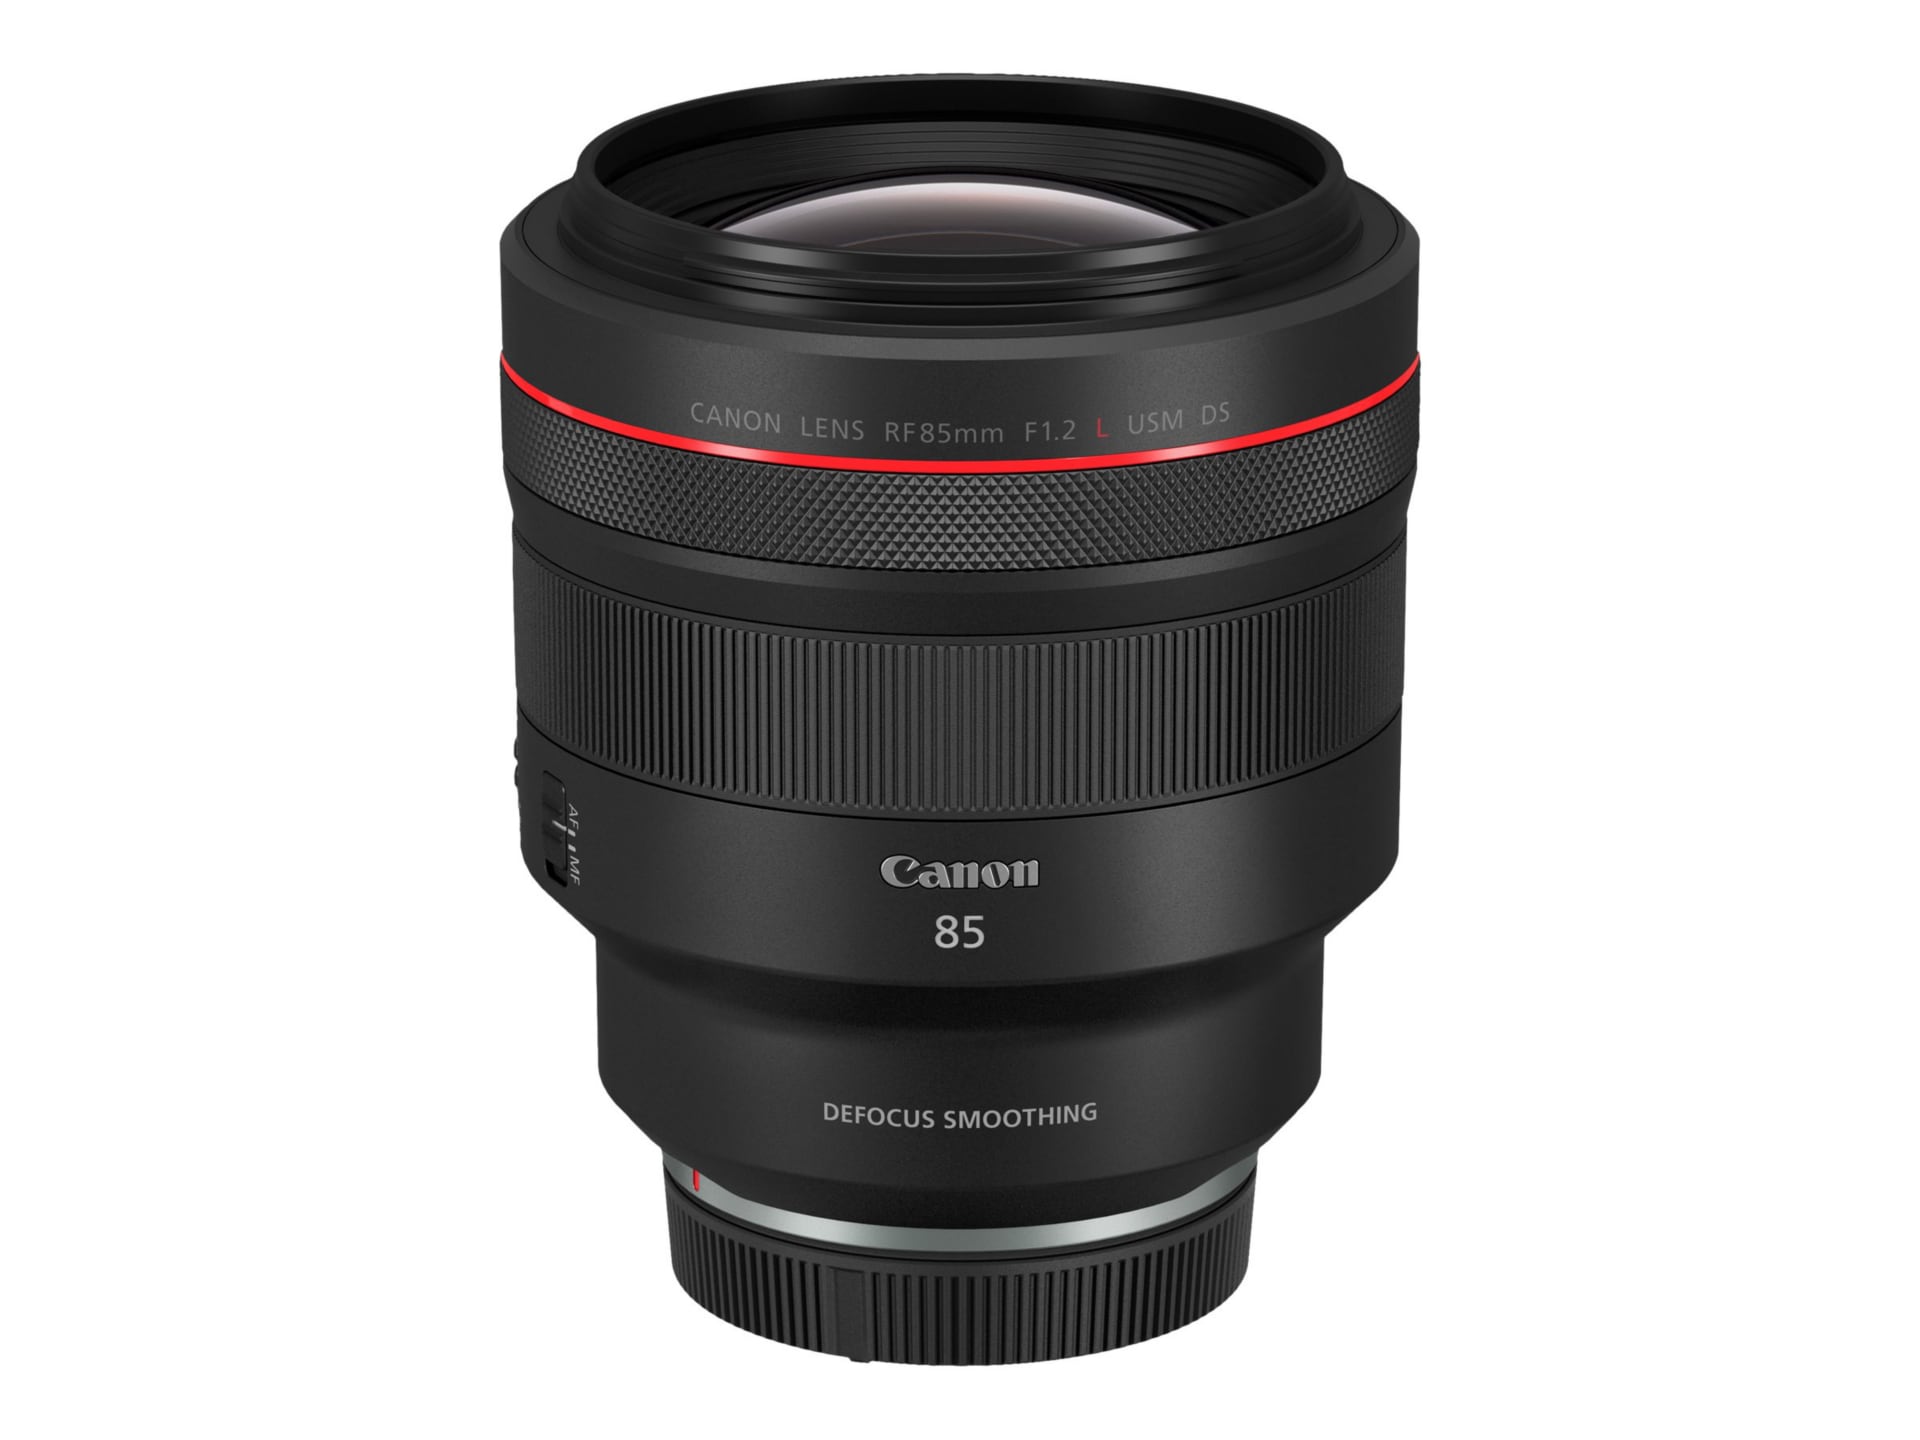 Canon RF telephoto lens - 85 mm